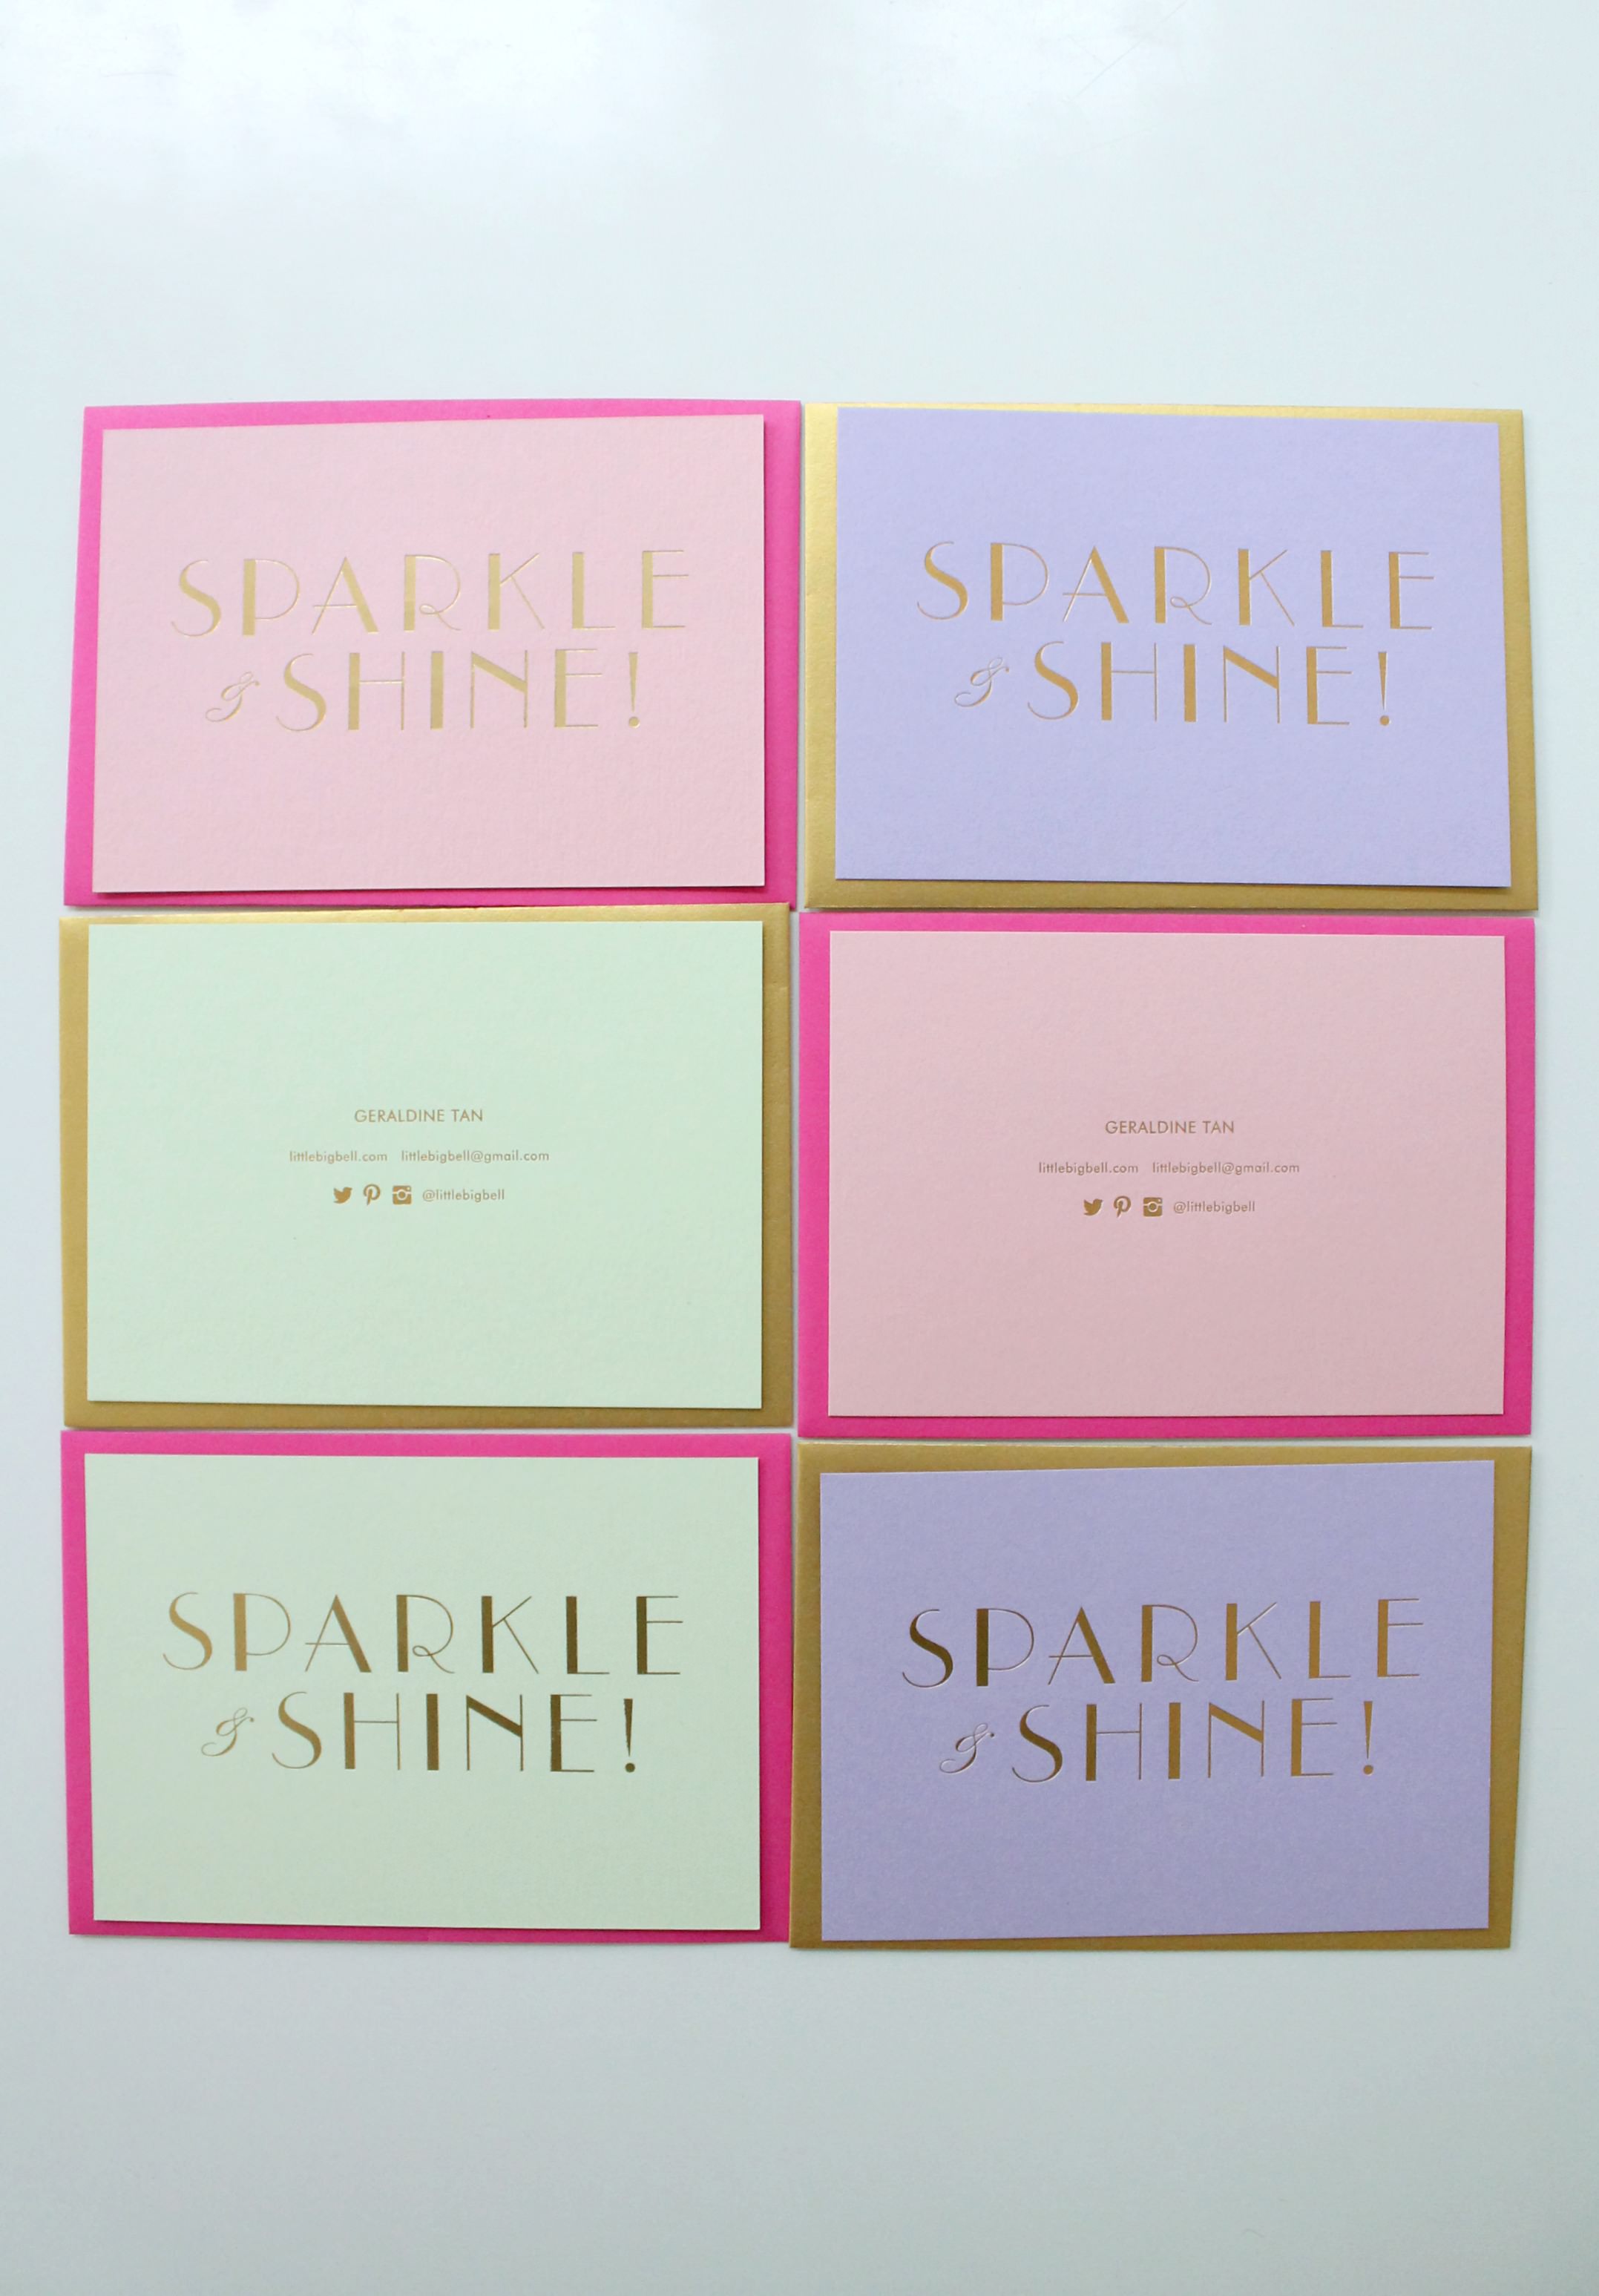 Little-Big-Bell's-business-cards-Alt-Summit-2015-designed-by-Studio-Sarah-London